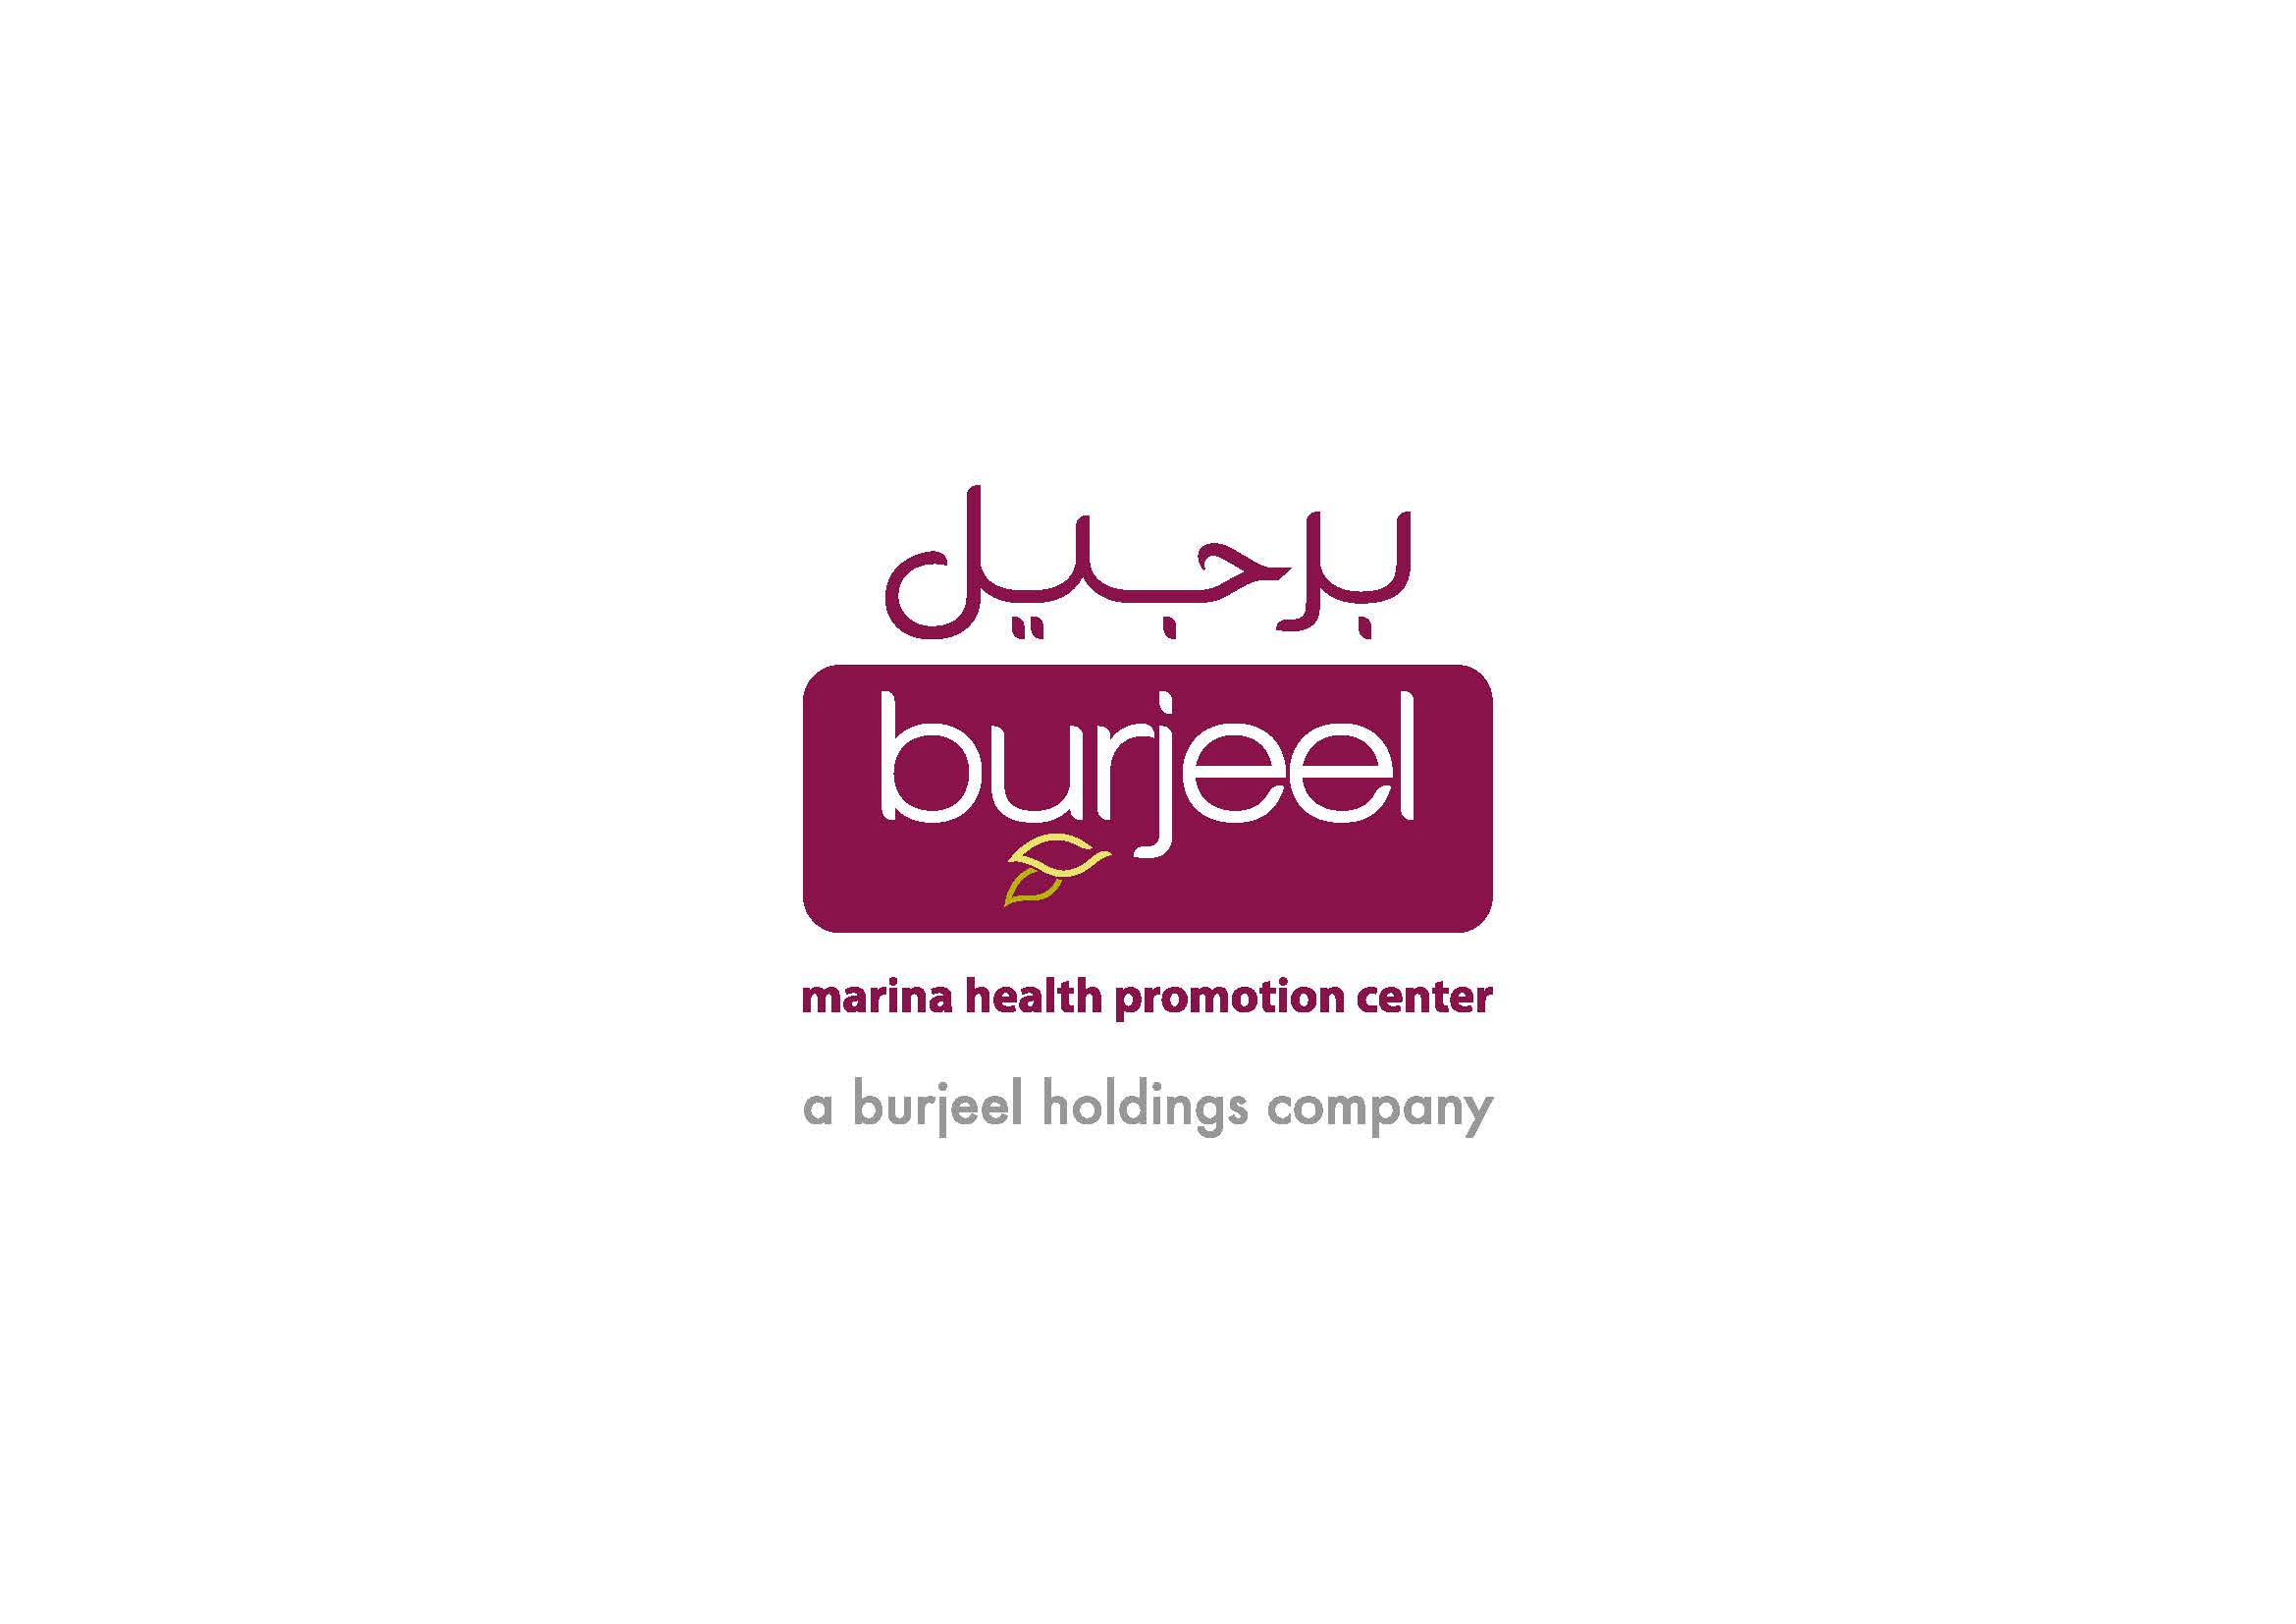 Burjeel Pharmacy